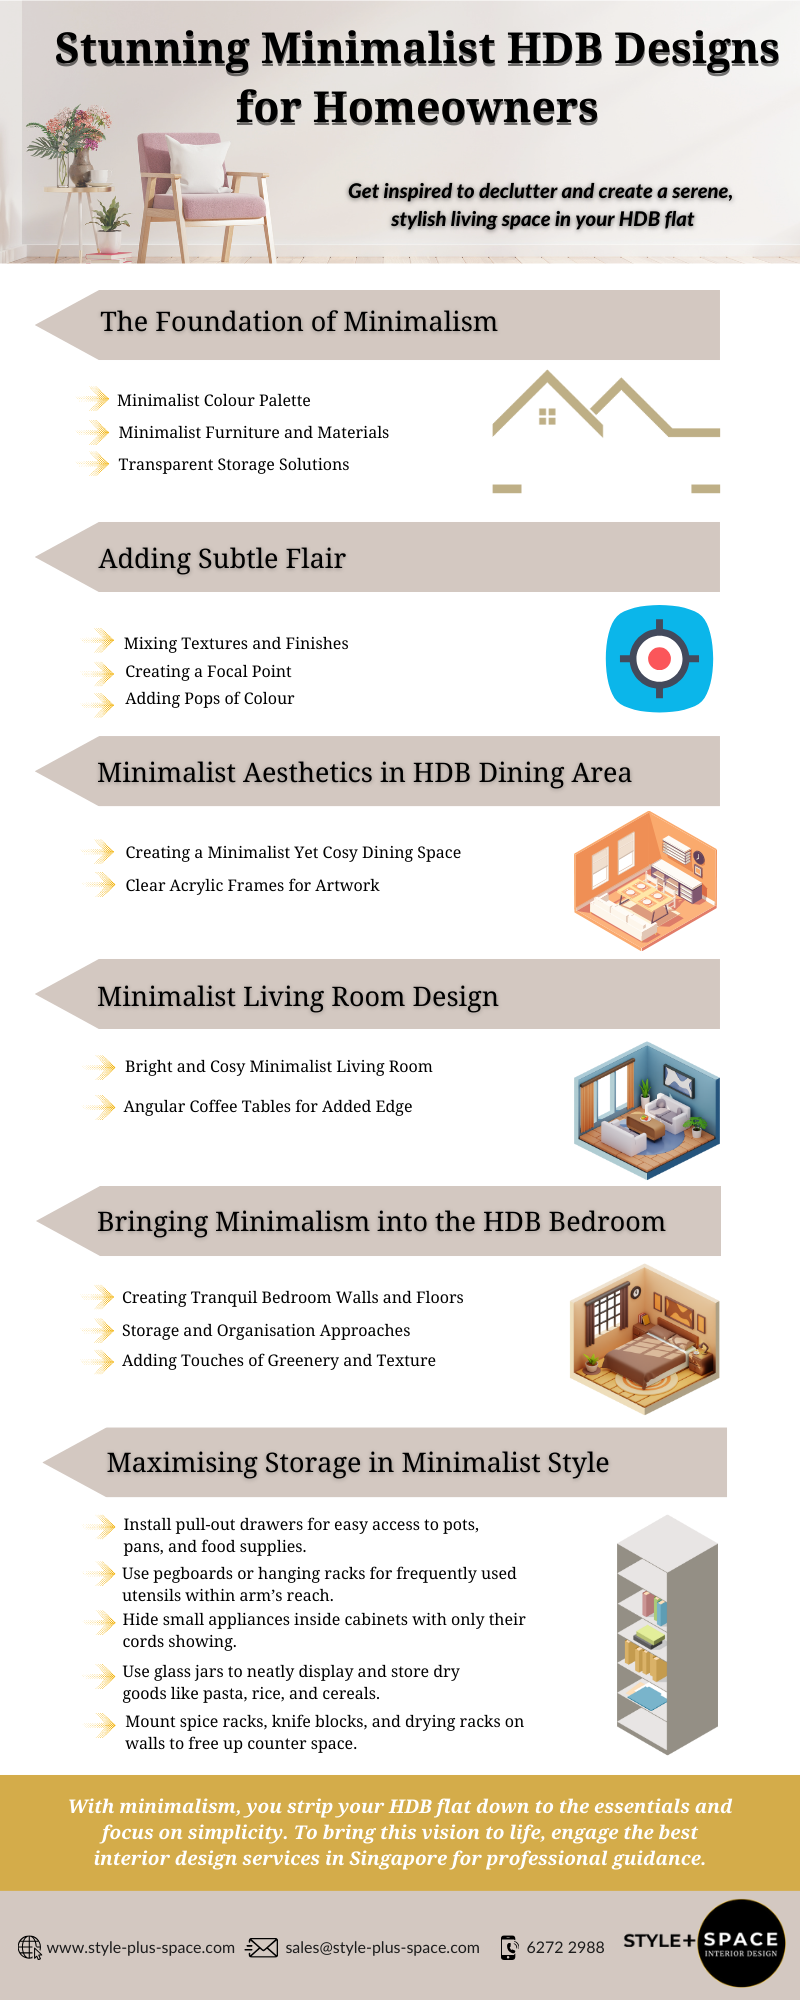 Stunning Minimalist HDB Designs for Homeowners